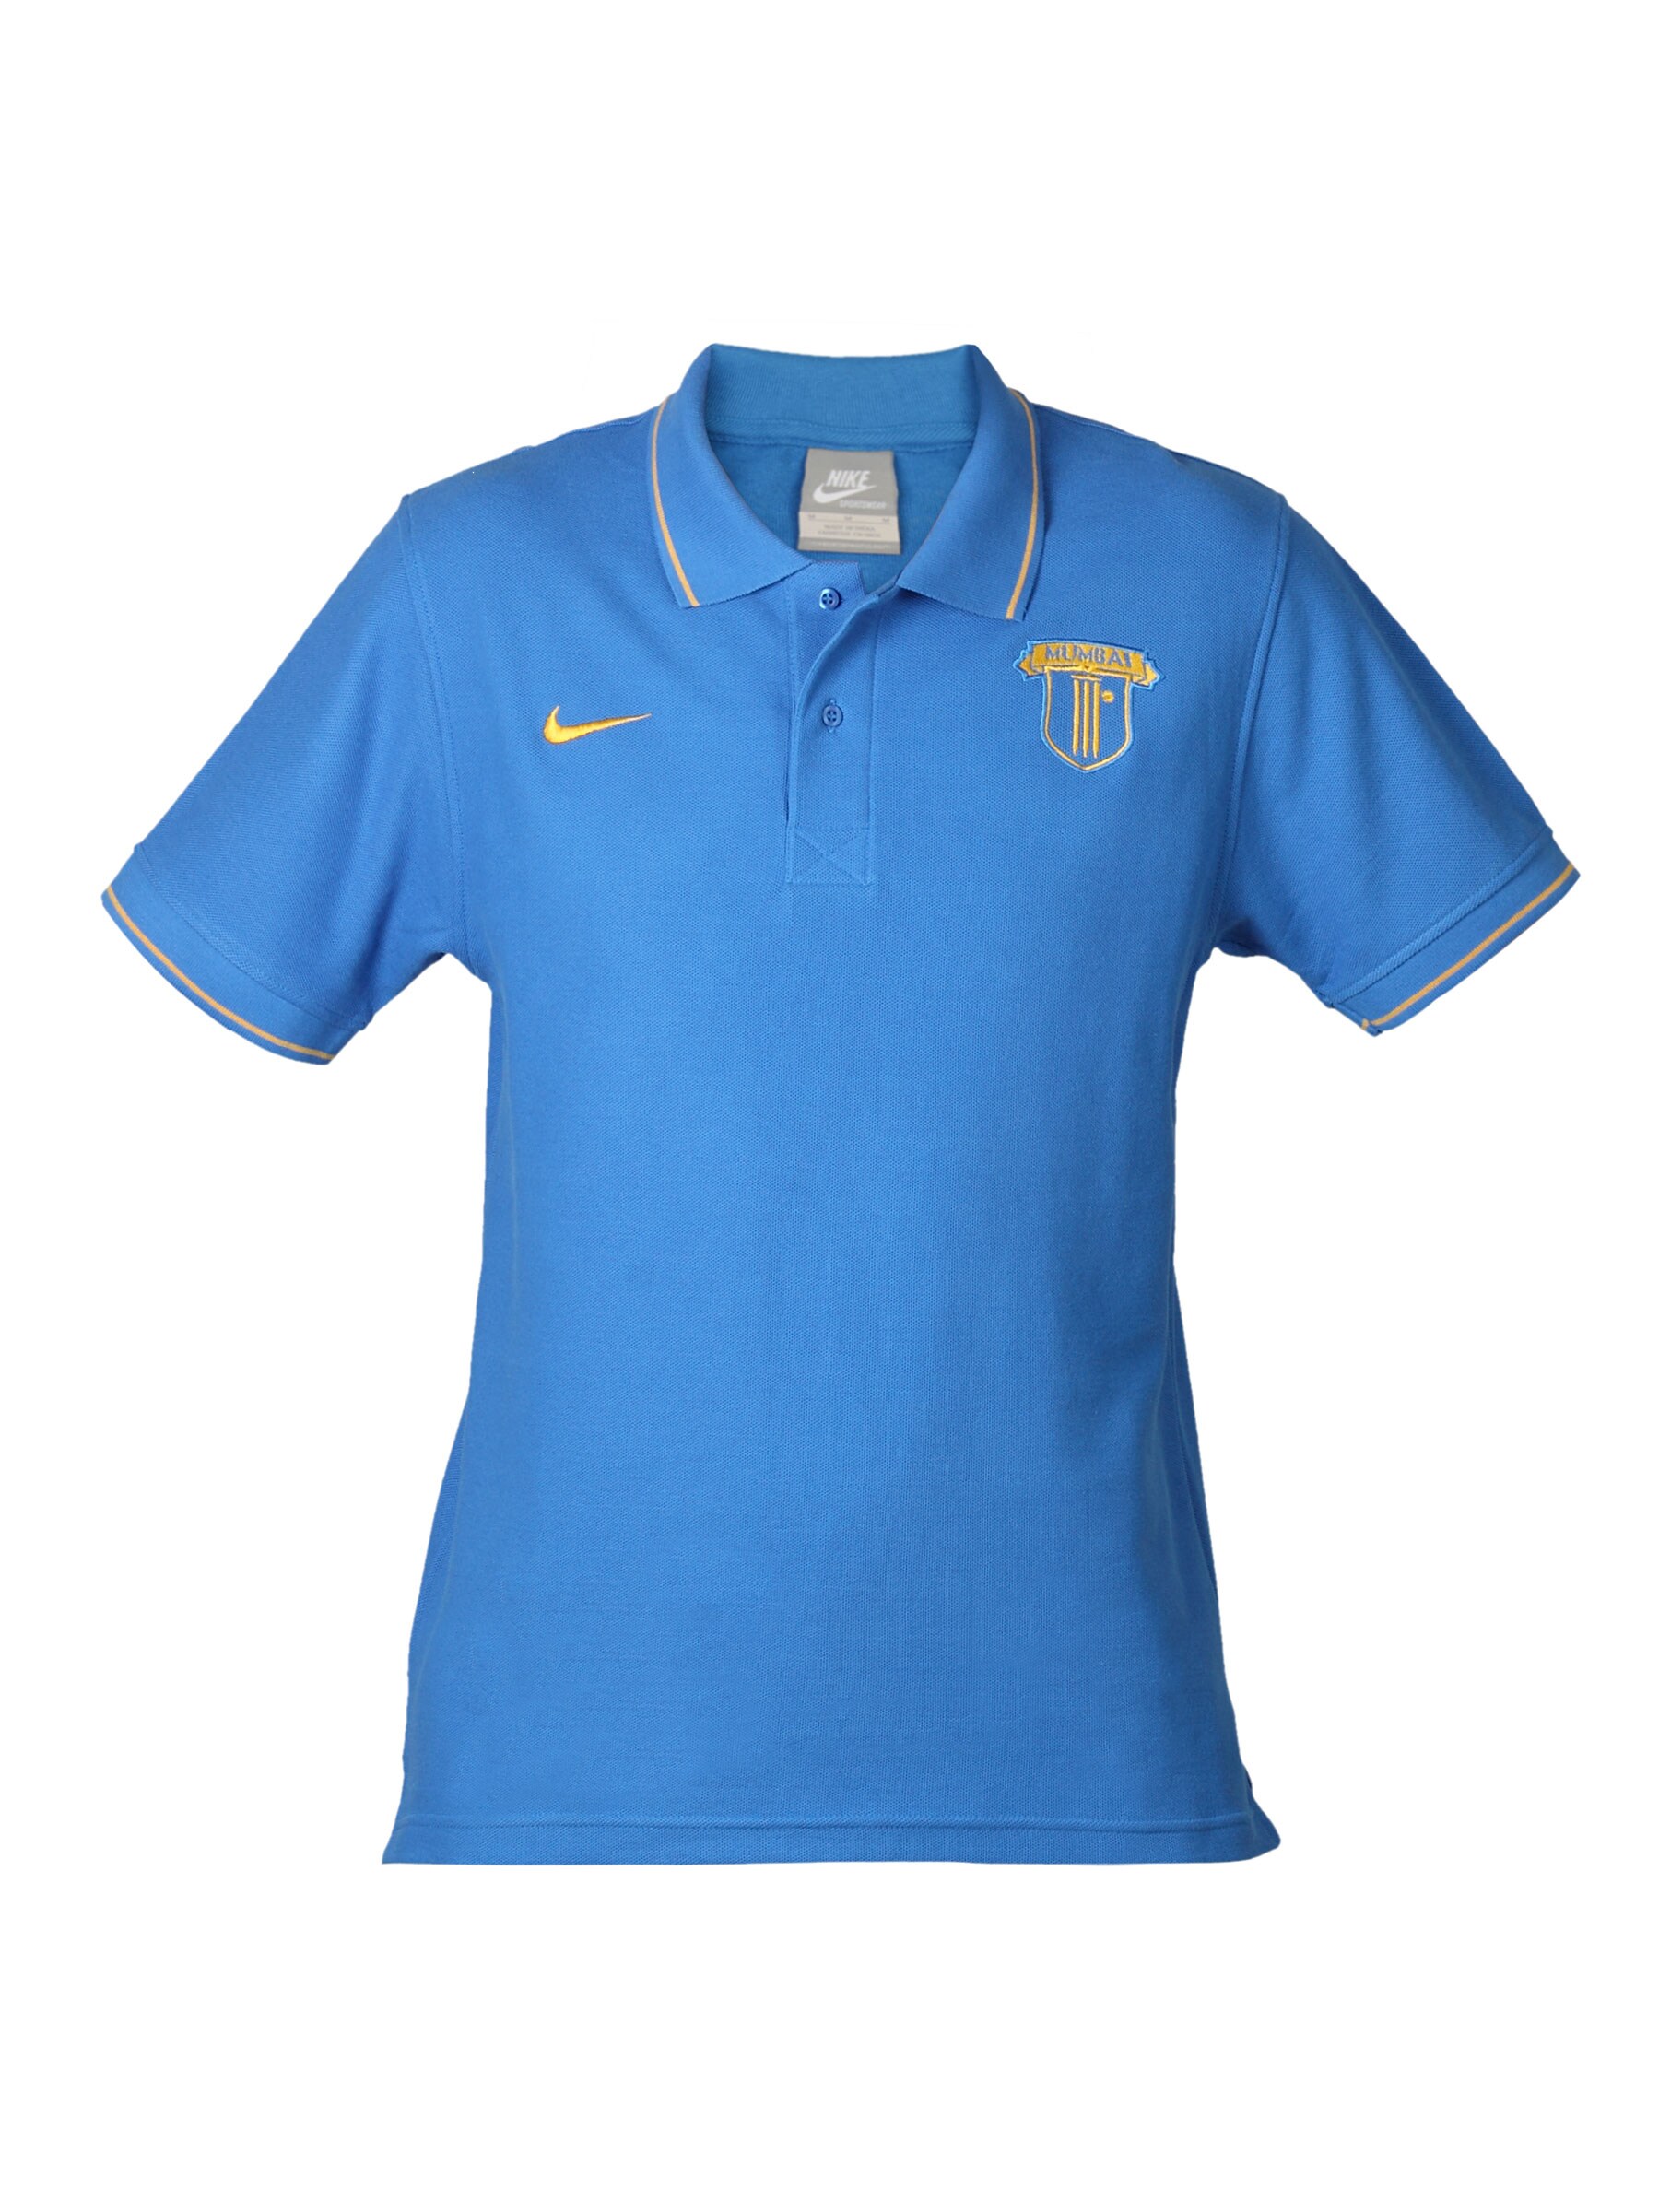 Nike Men Blue Cricket Blue Polo Tshirt